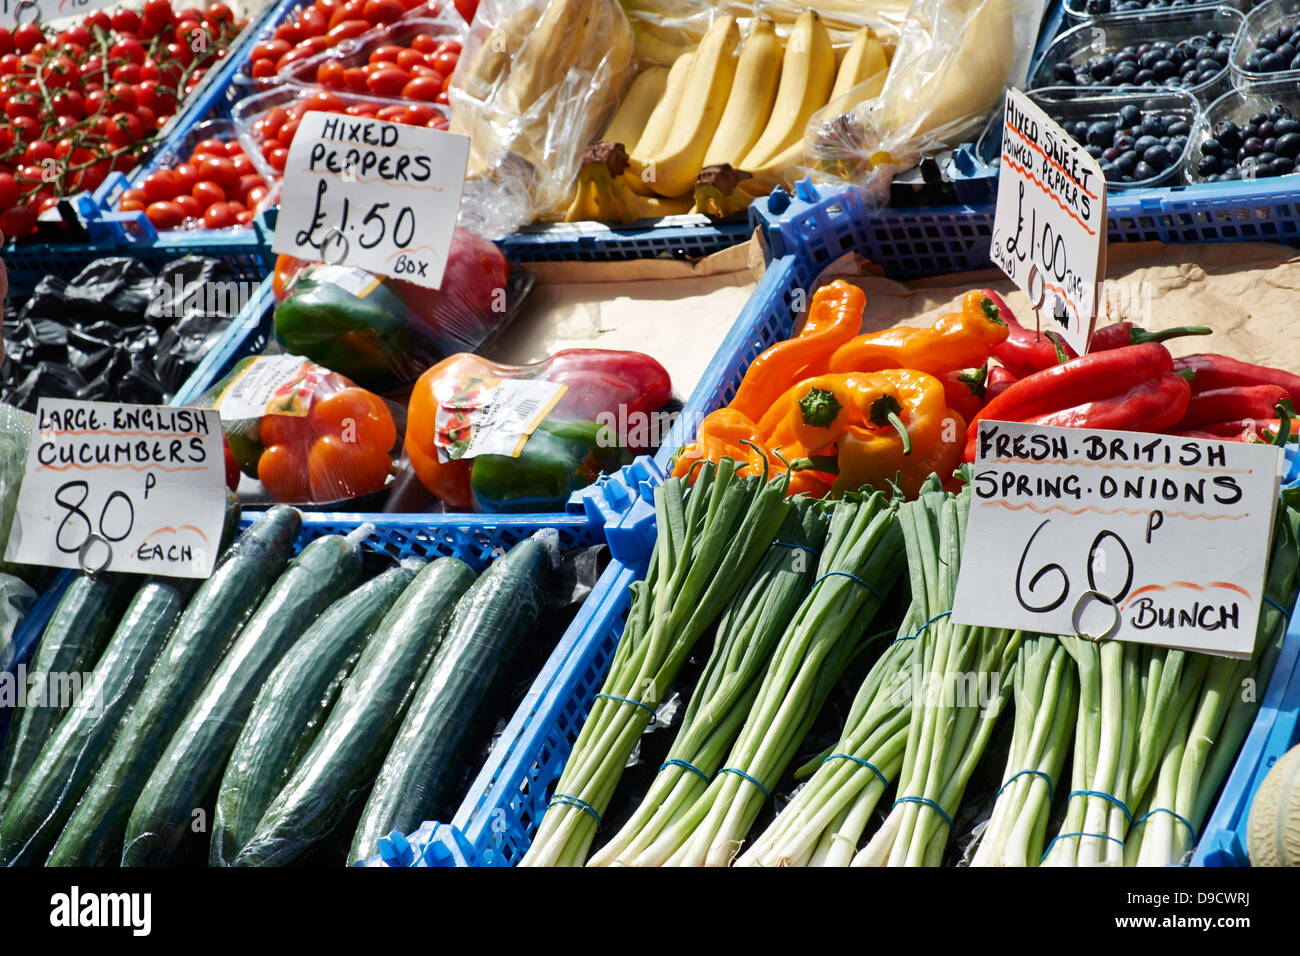 Fruit and veg stall at Hexham farmers market. Stock Photo